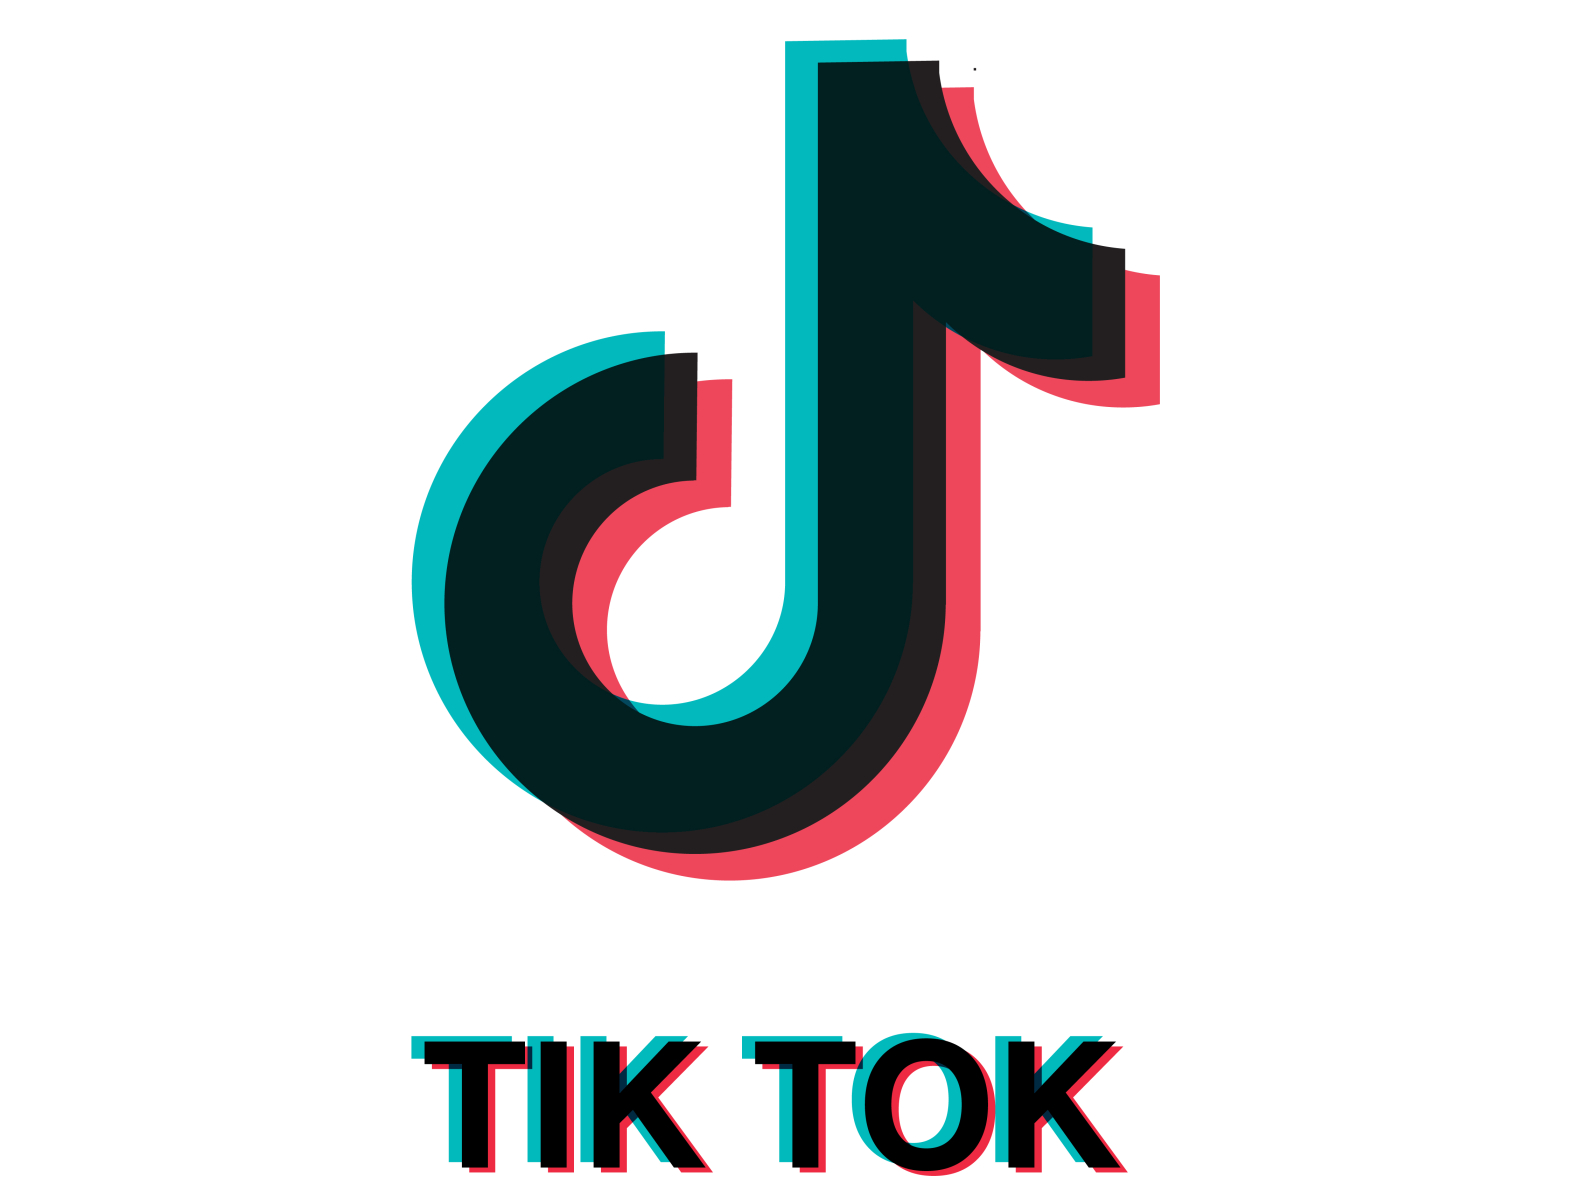 Tiktok Logo - tiktok lover photo editing backgrounds and stock images